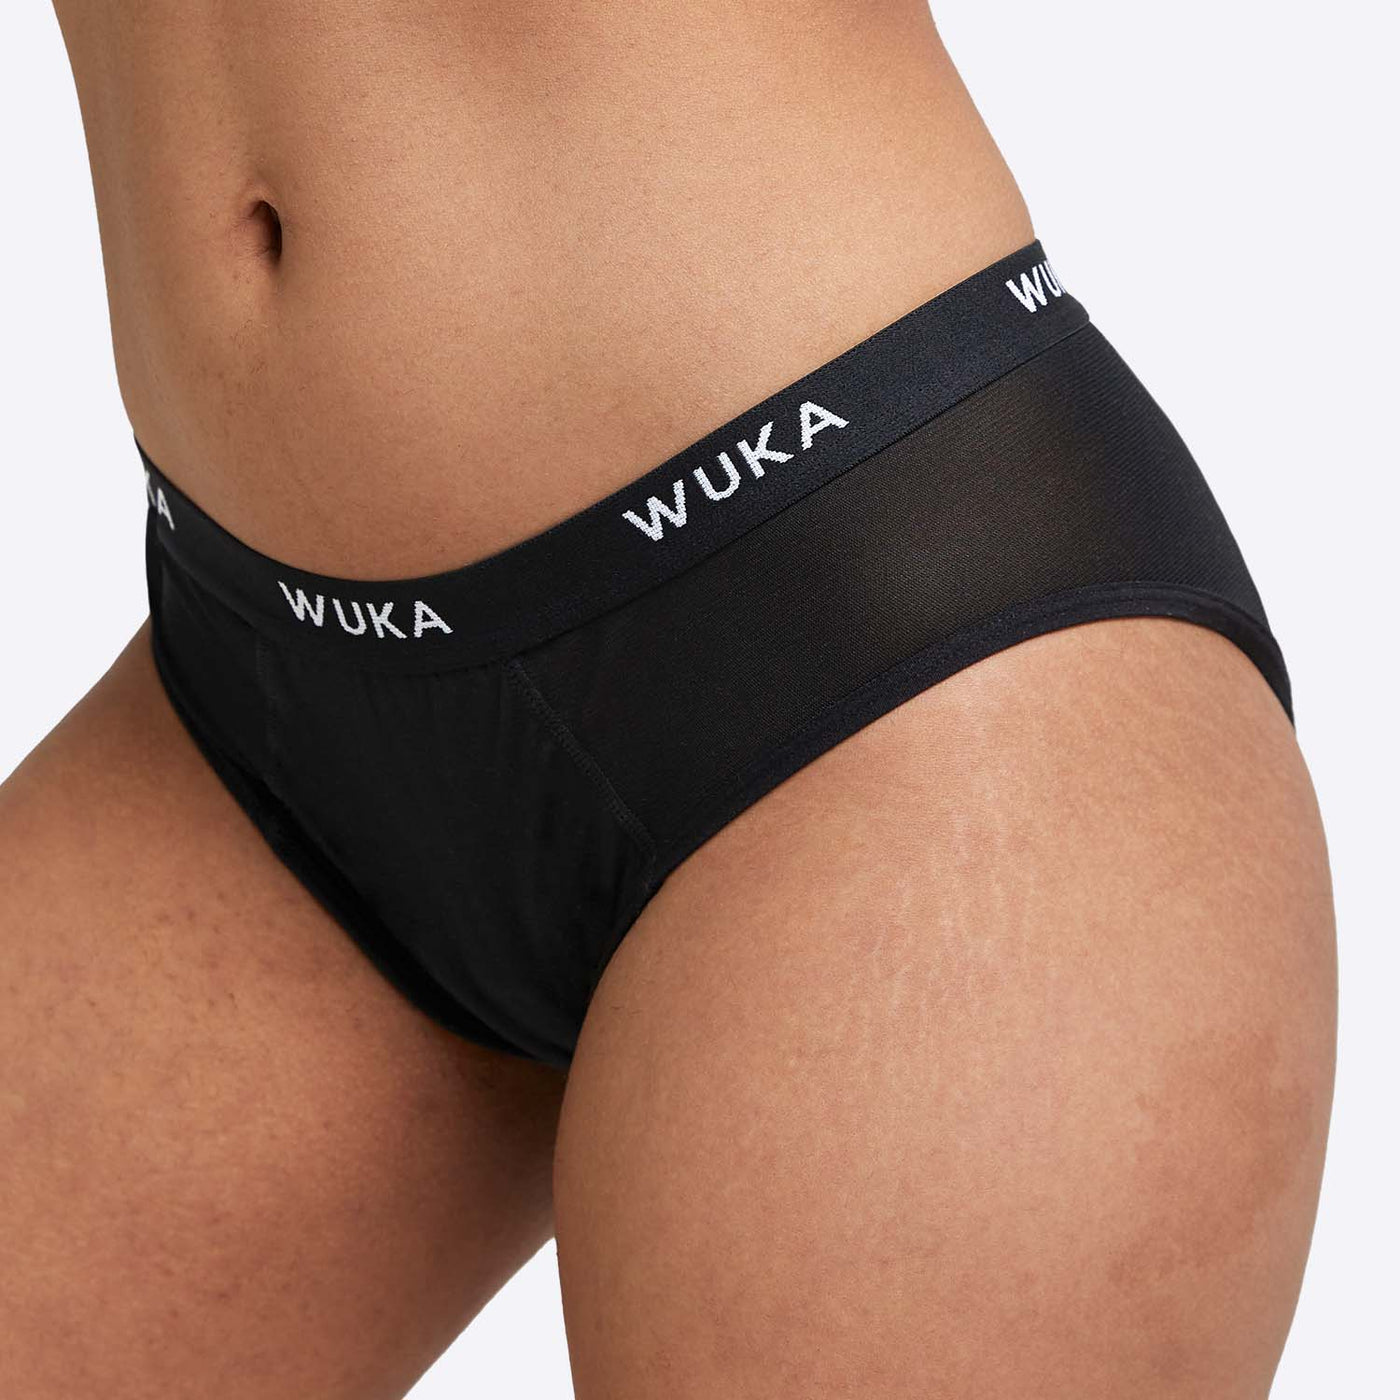 WUKA Basics Period Pants - Hipster Style Heavy Flow